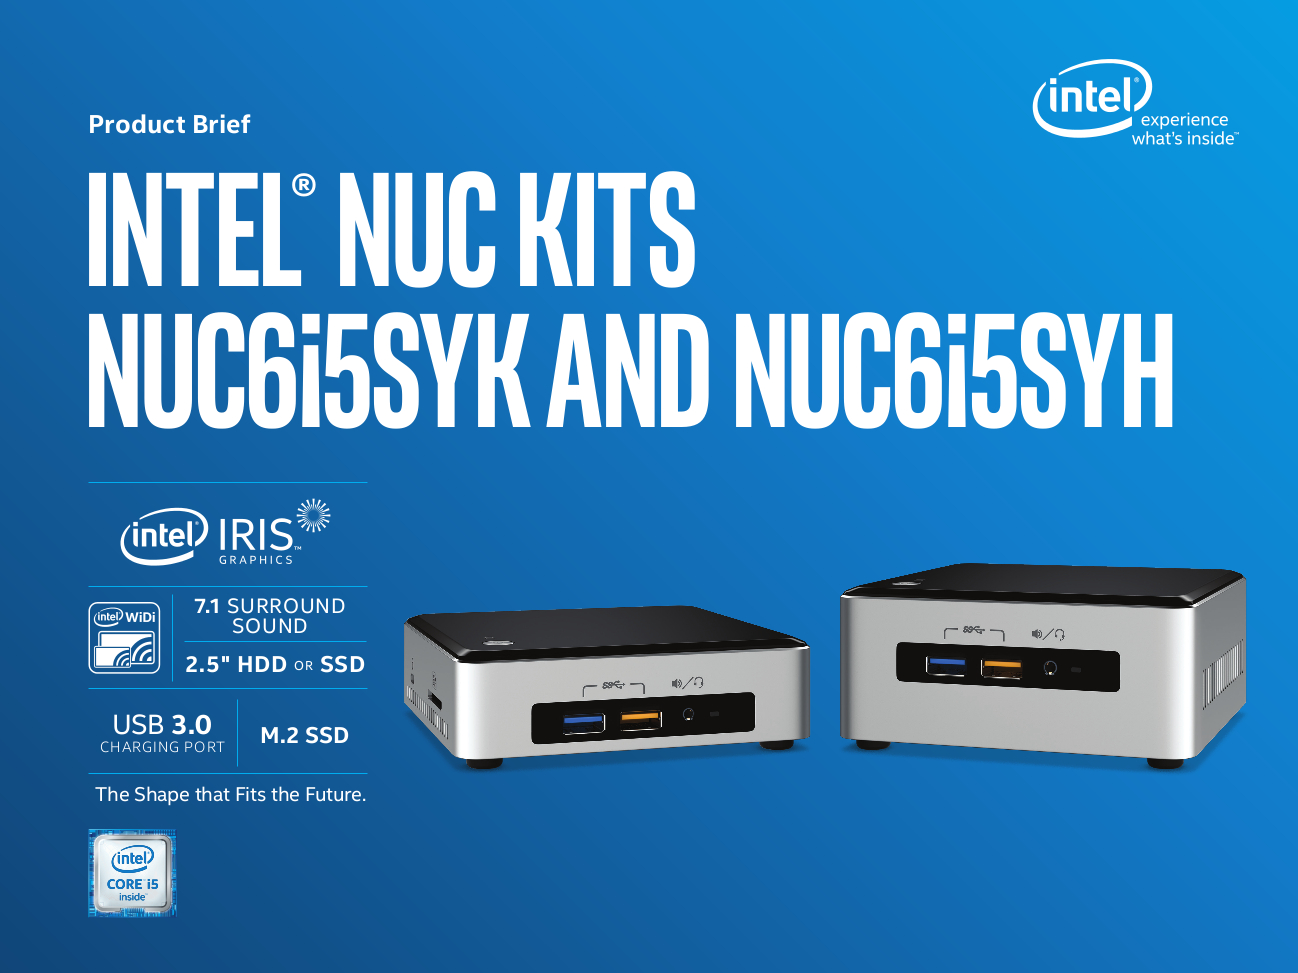 Intel updates the NUC with latest Intel Skylake processor 30